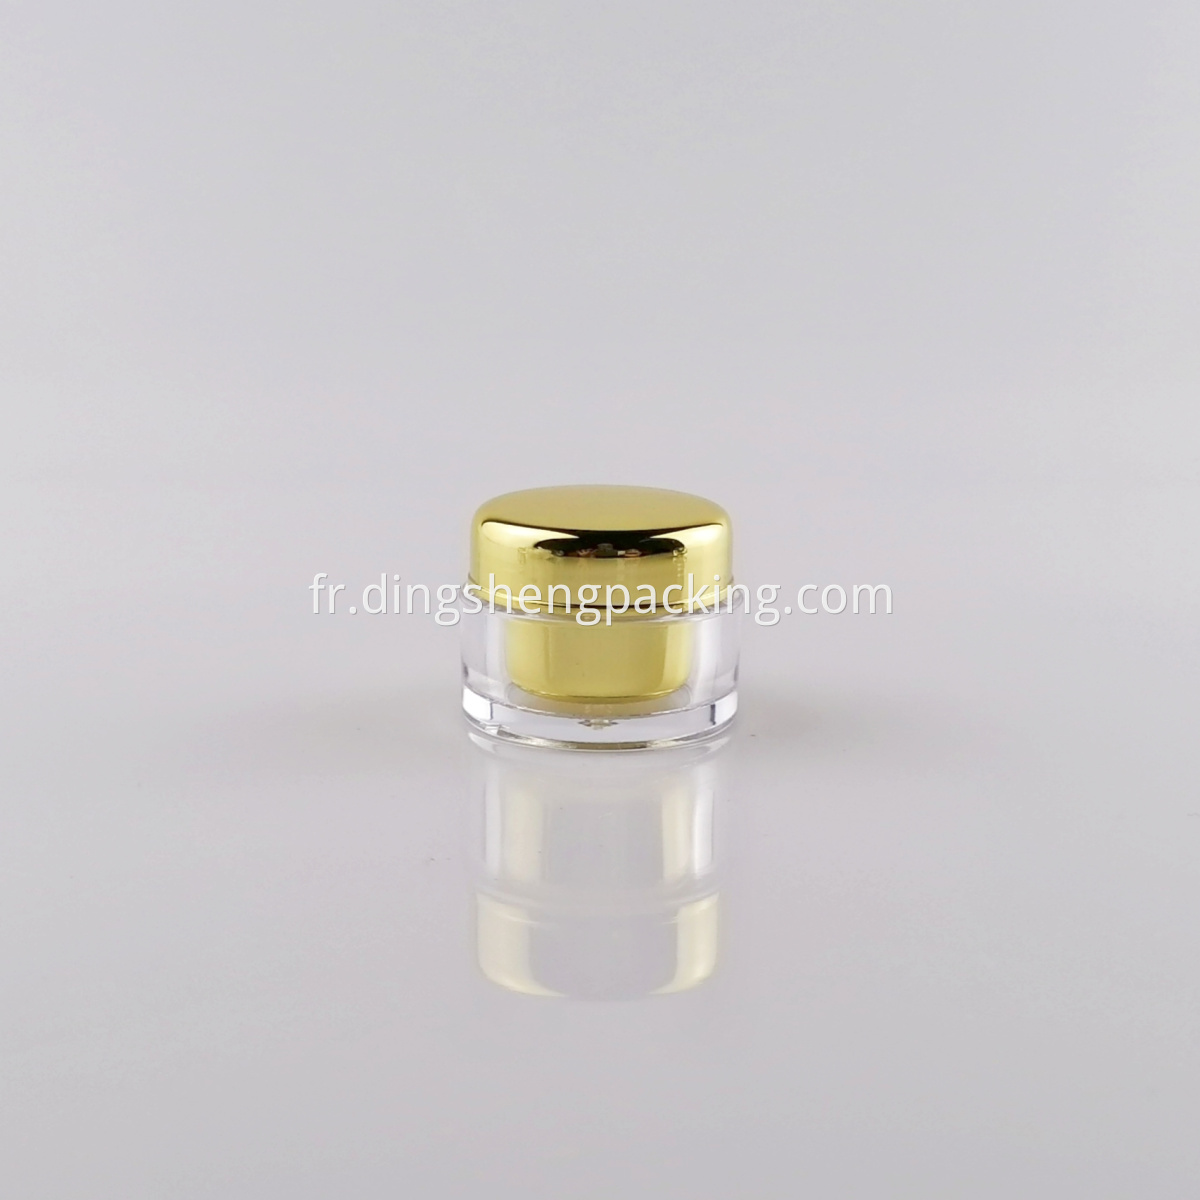 Round Small 5g Acrylic Plastic Cosmetic Cream Jar